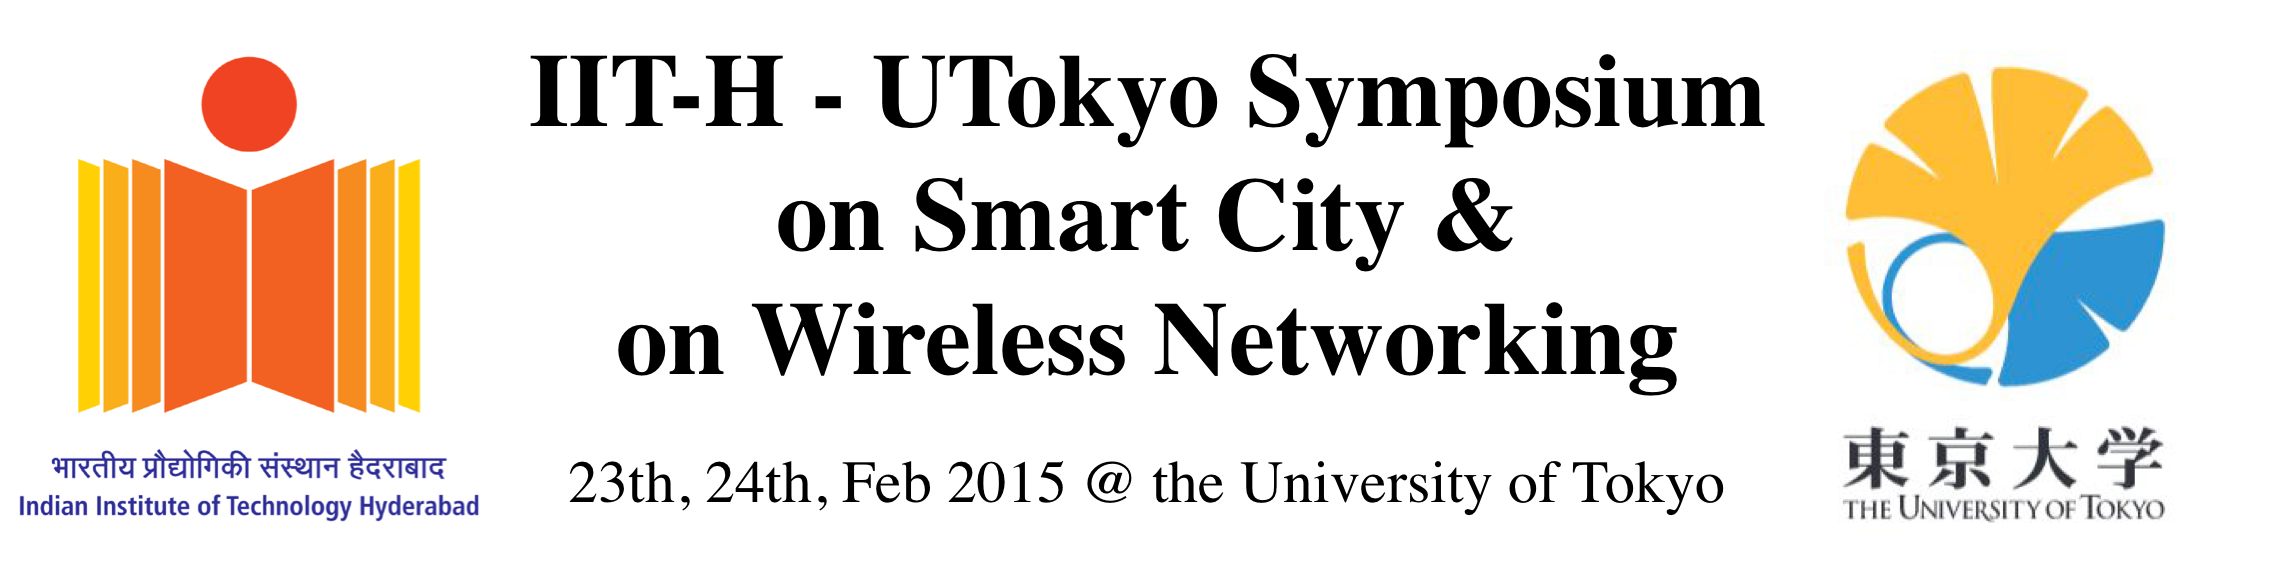 IIT-H - UTokyo Symposium on Smart City and Wireless Networking,23-25 Feb 2015 @ the University of Tokyo